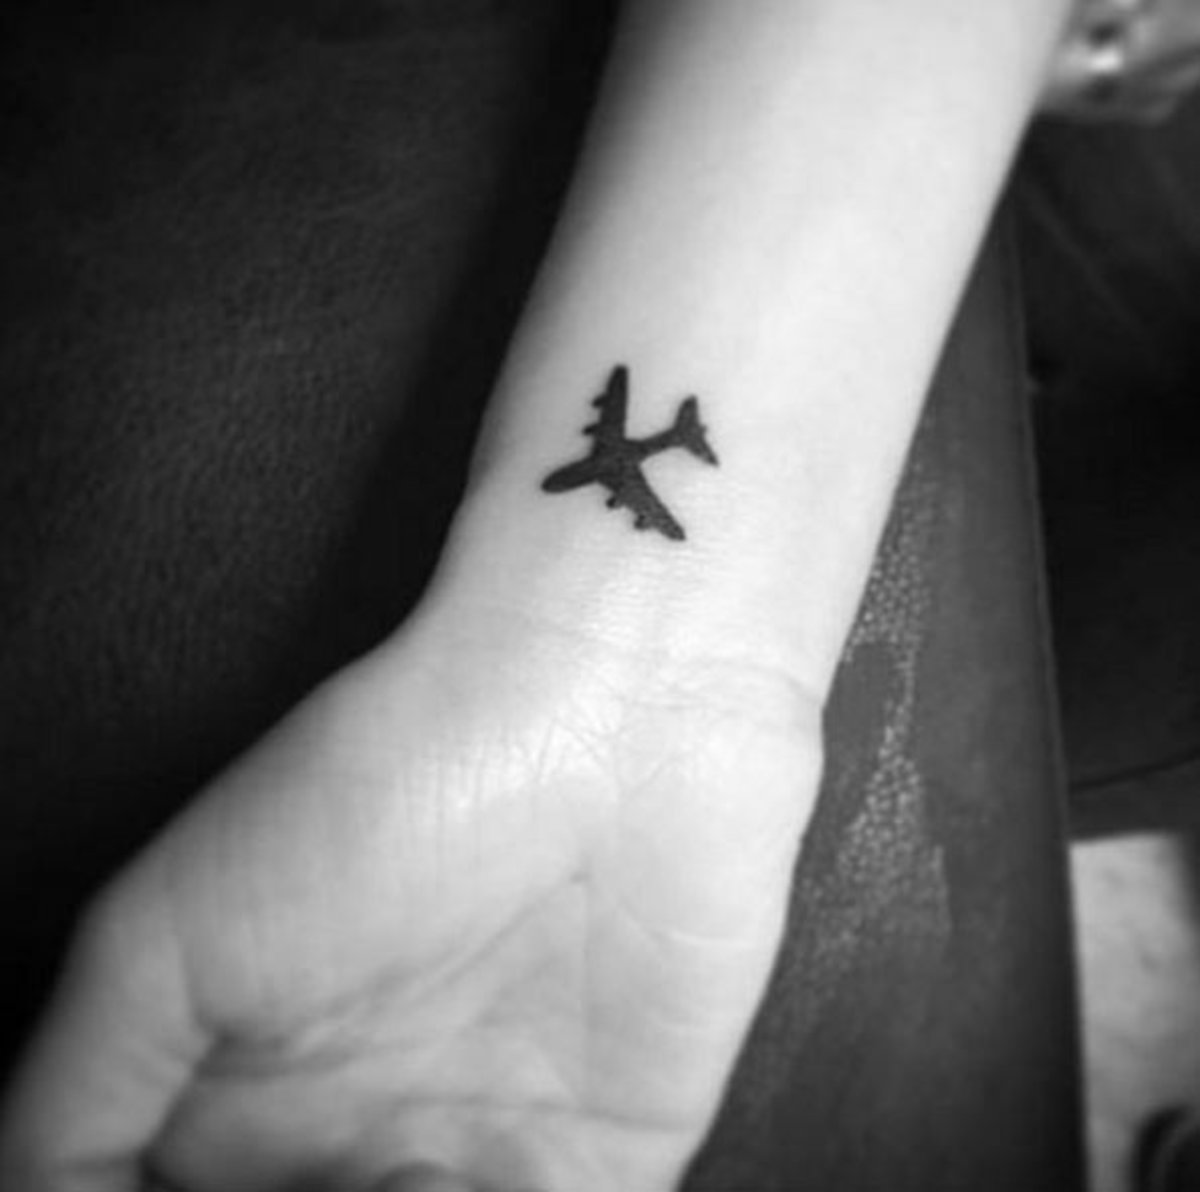 Airplane tattoo located on the wrist, minimalistic